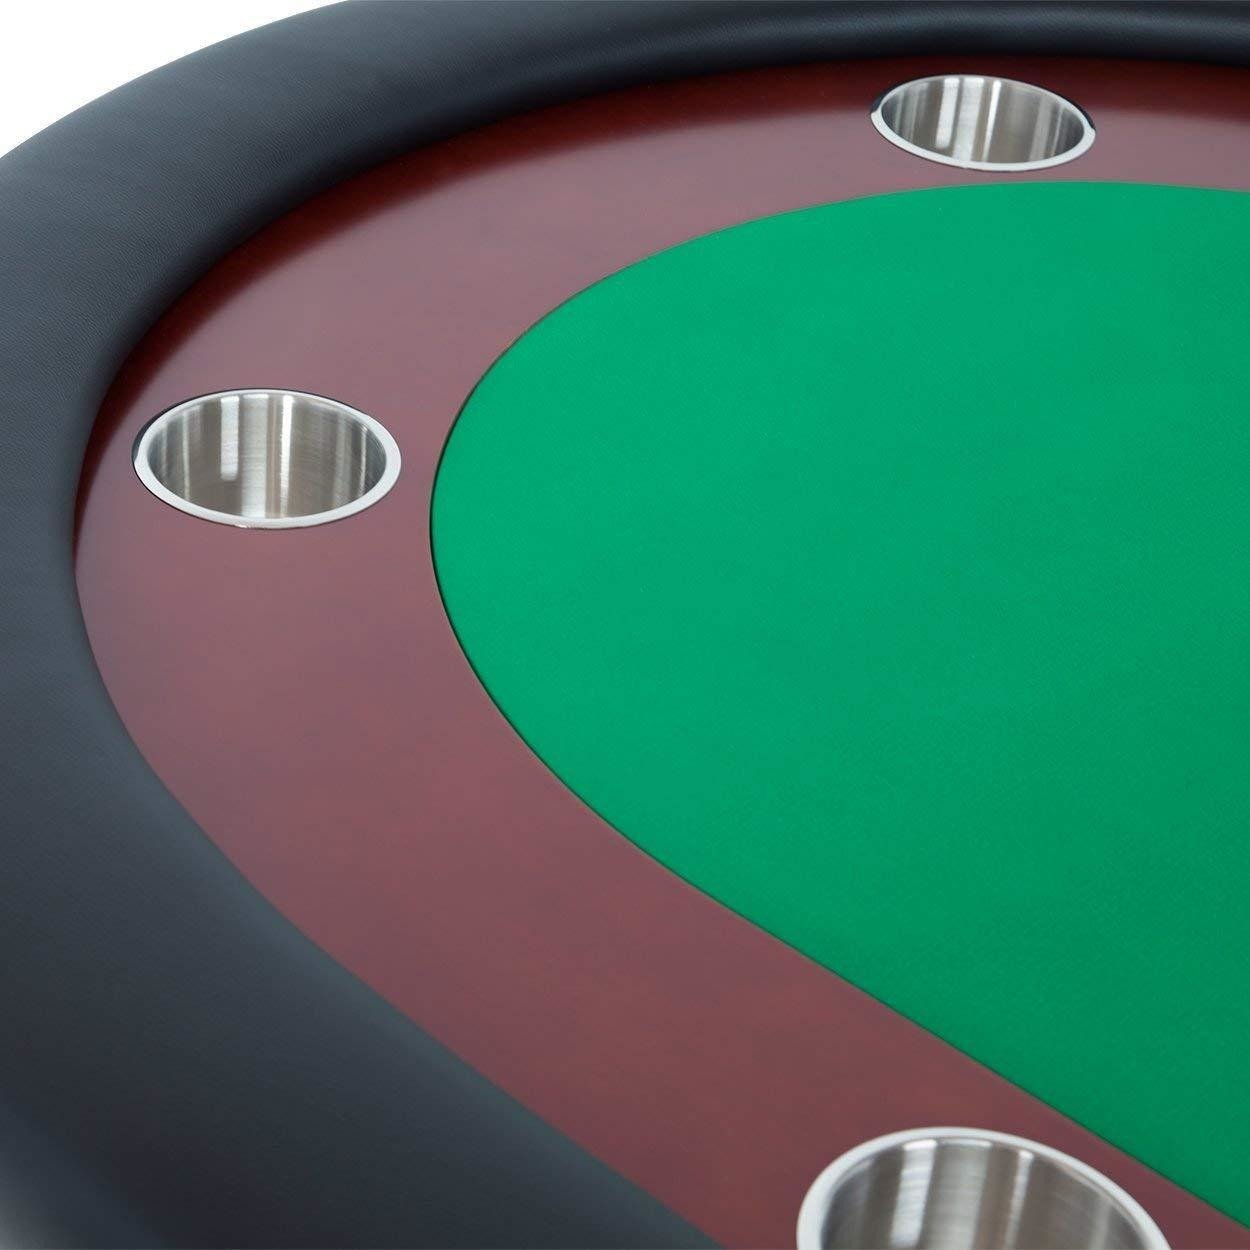 BBO Poker Tables Rockwell Mahogany Oval Poker Table 10 Person - Gaming Blaze